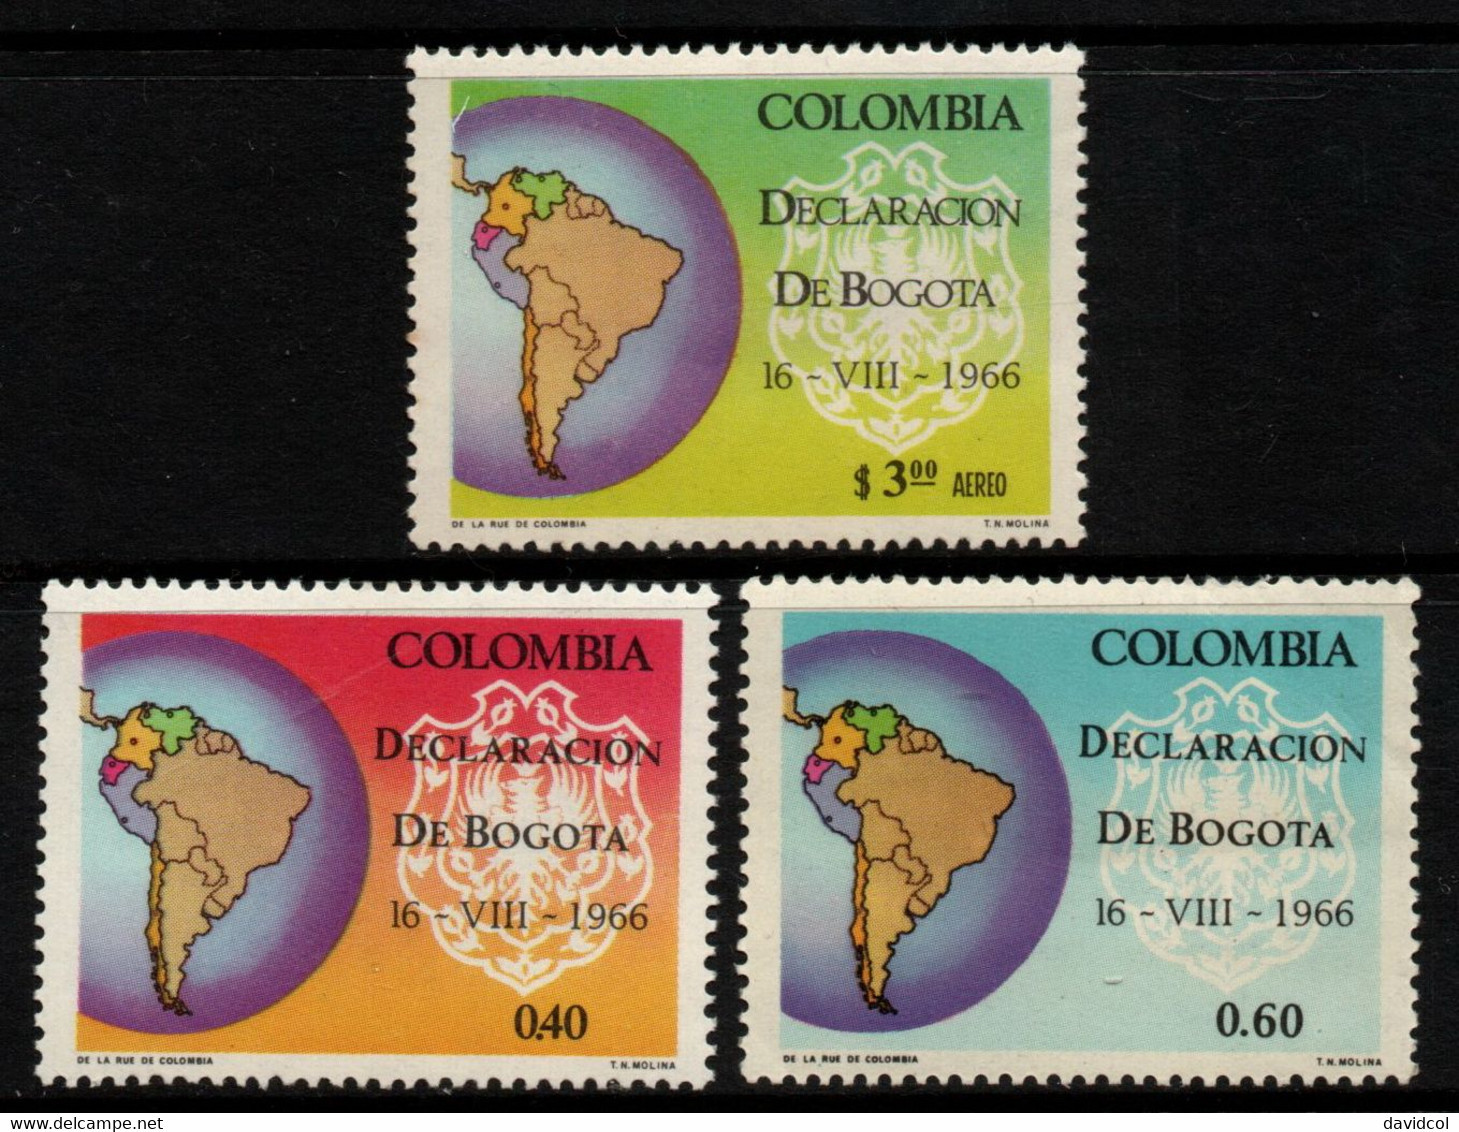 02- KOLUMBIEN – 1967- MI#:1095-1097 - MNH- BOGOTA DECLARATION – MAPS/ COAT - Colombie